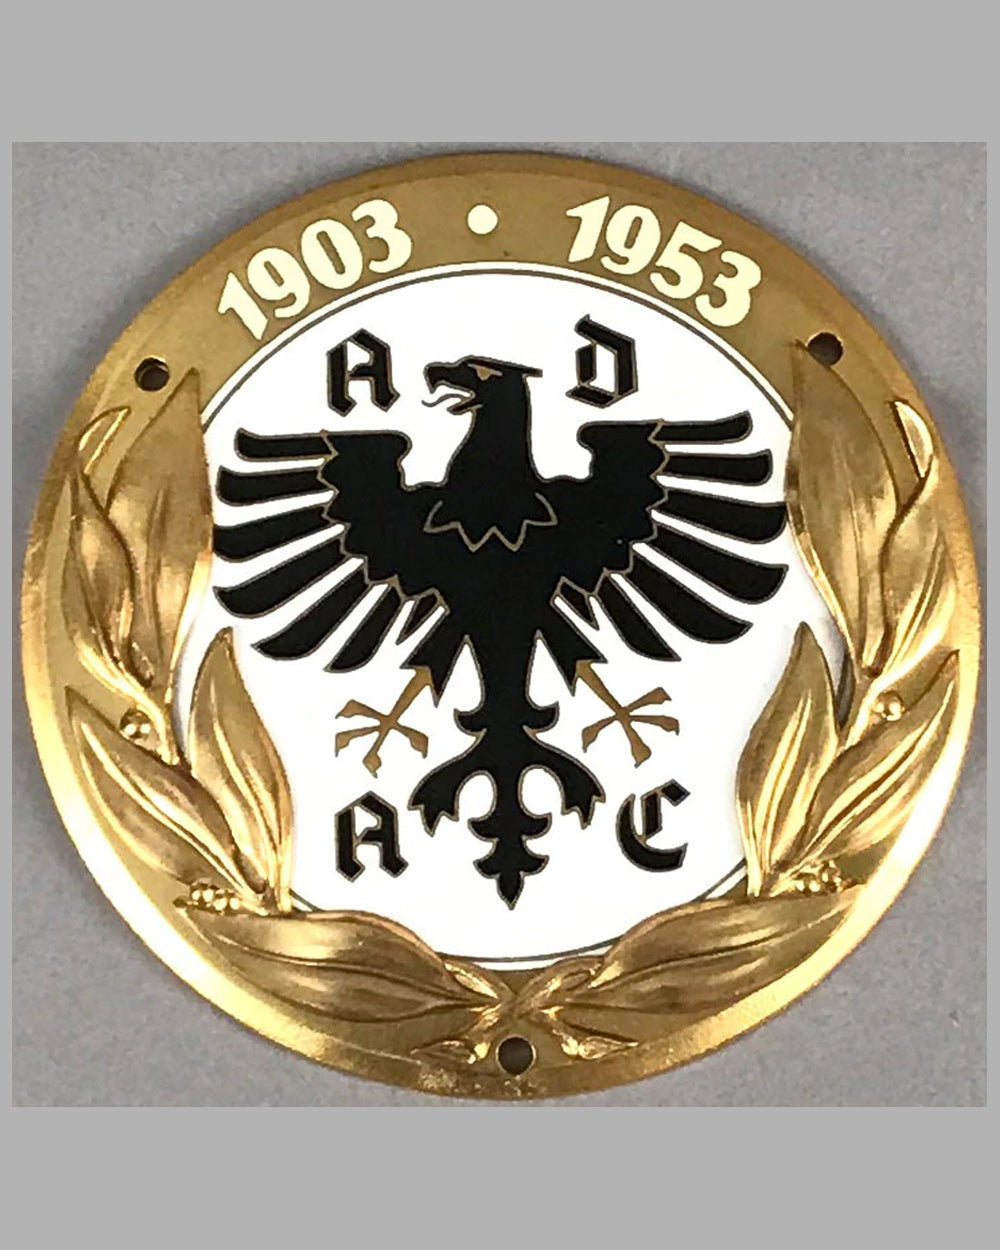 ADAC 50 year anniversary car badge, 1953